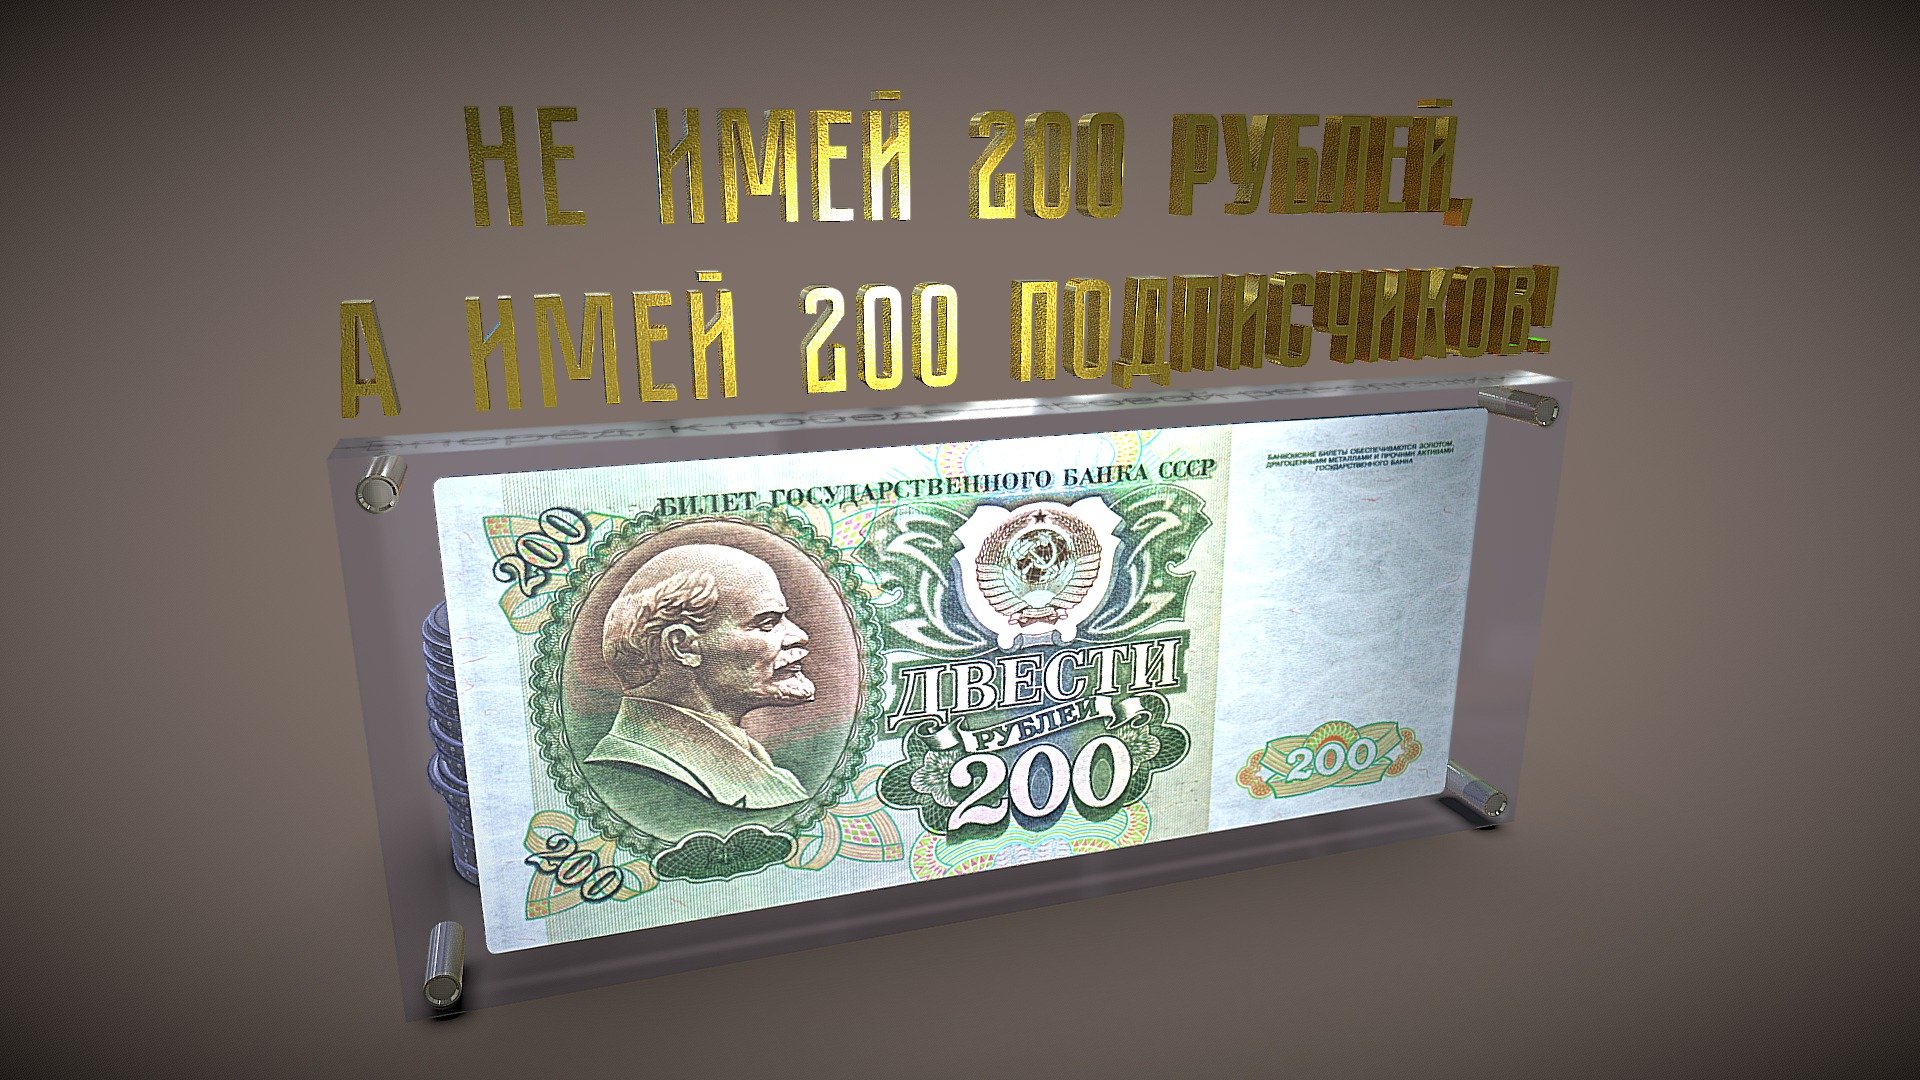 Do not have 200 Rubel, but have 200 subscribers instead. I have both :D
Не имей 200 рублей, а имей 200 подписчиков. У меня есть и то и то. :) - 200 subscribers milestone 3d model